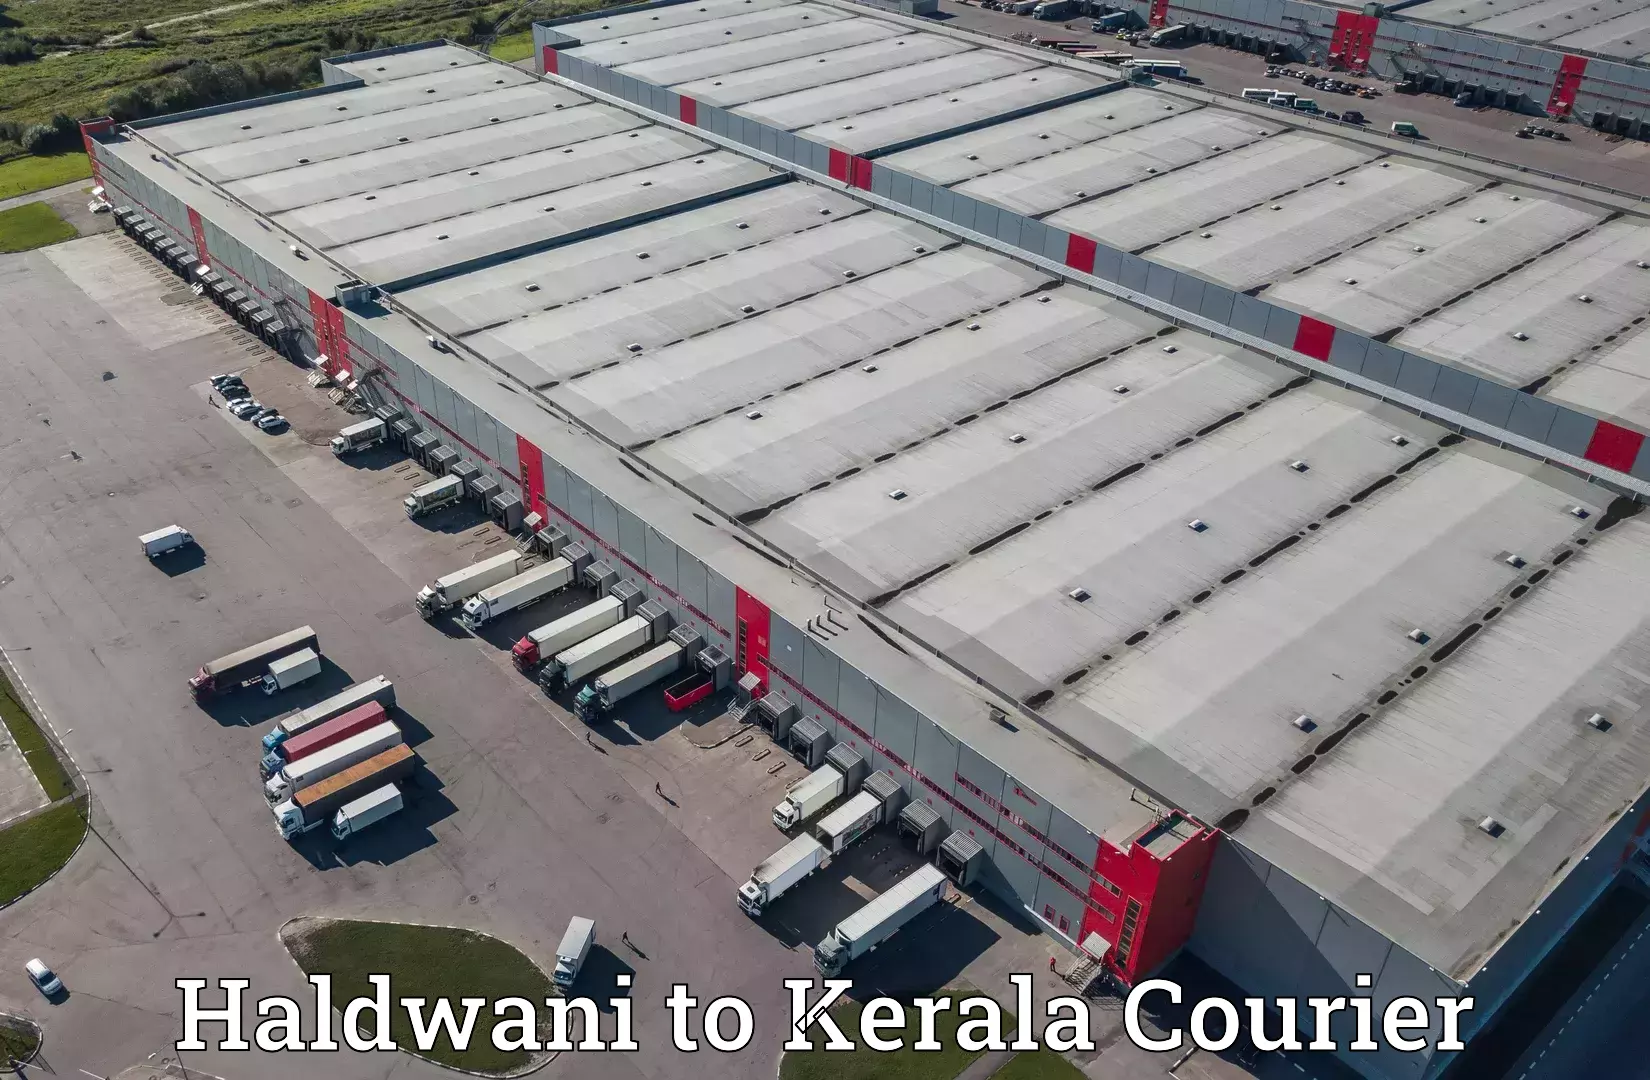 Package delivery network Haldwani to Cochin Port Kochi